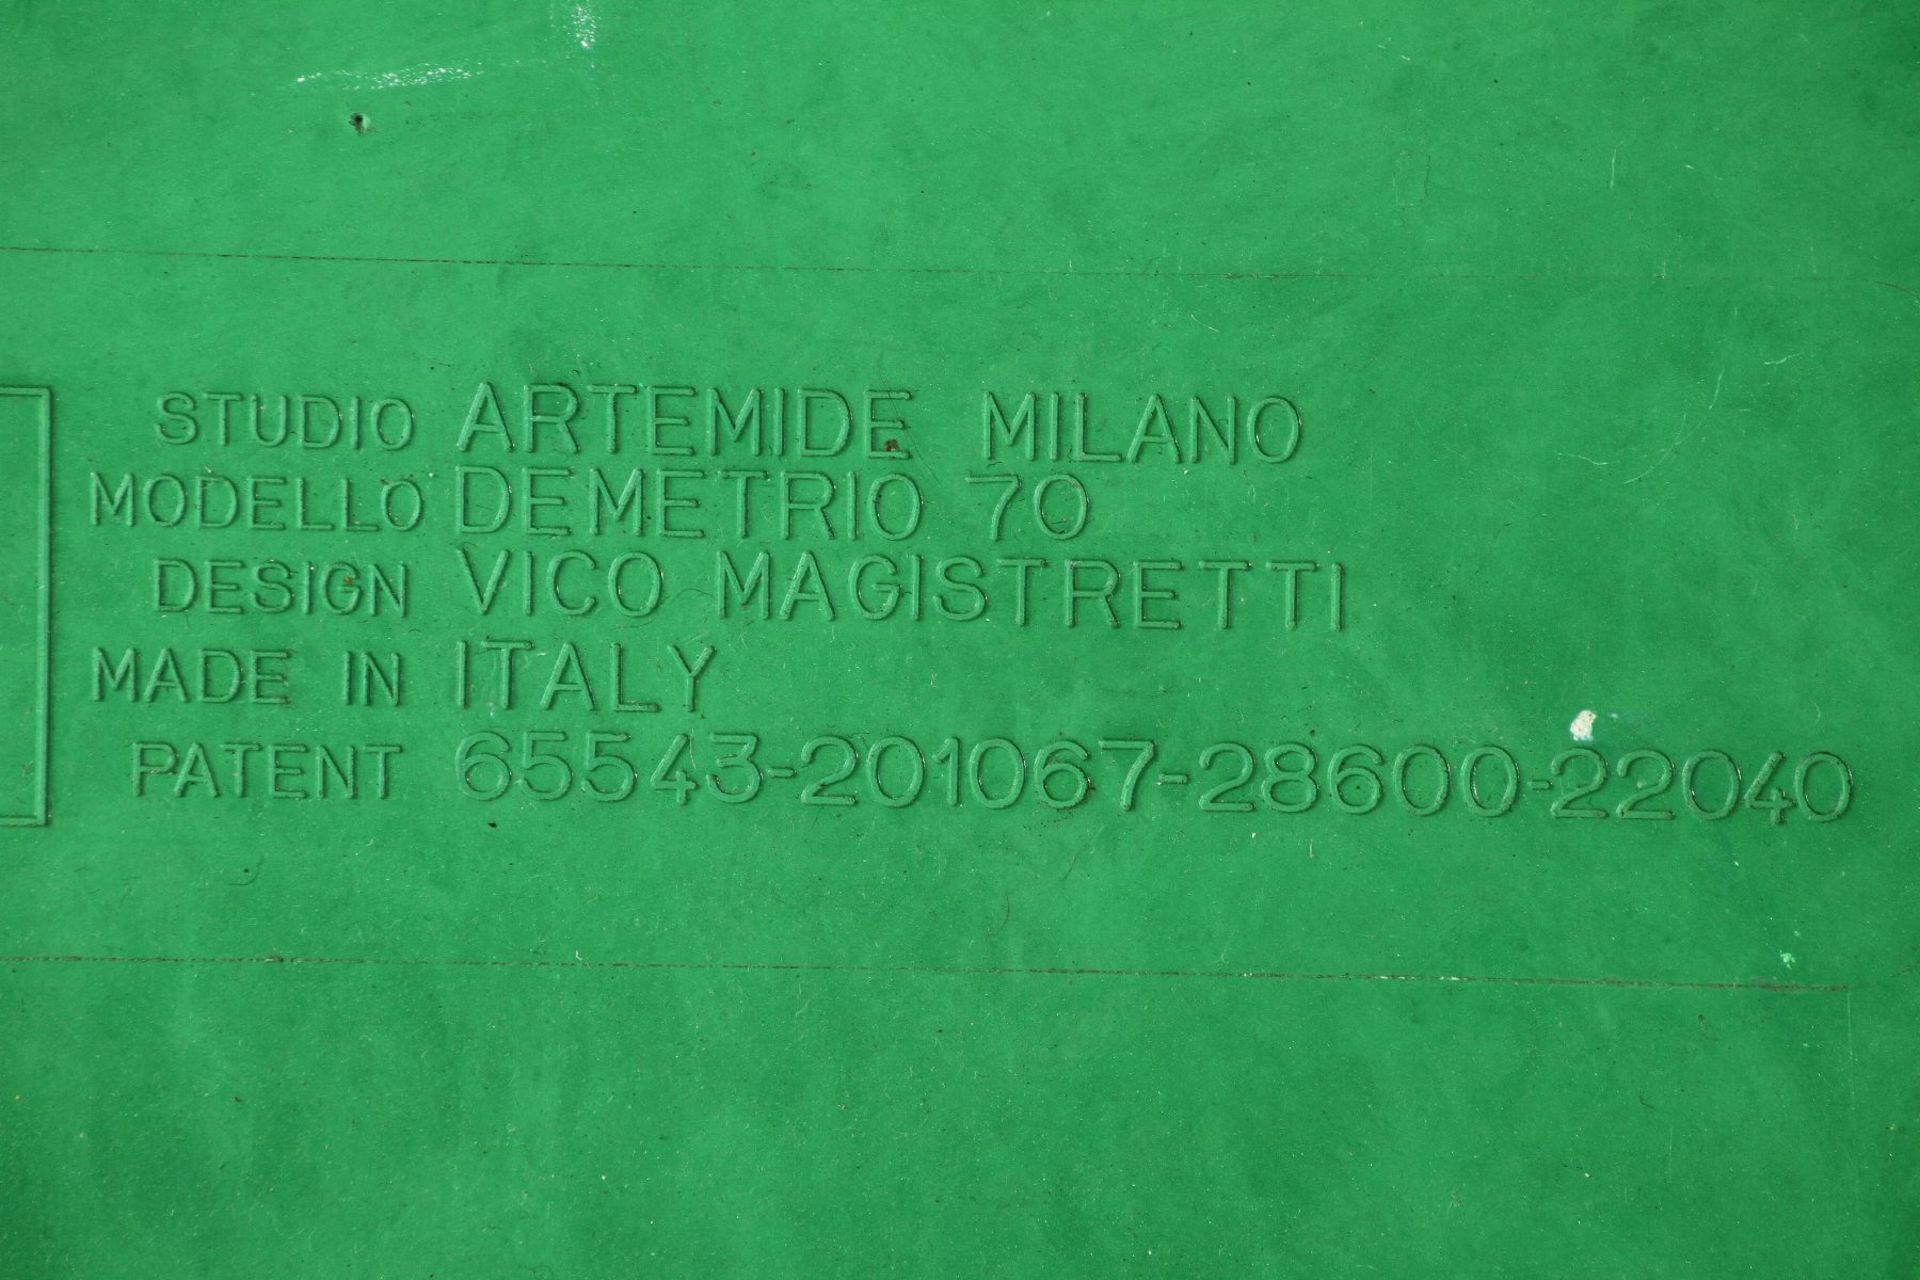 Couchtisch, Studio Artemide Milano", made in Italy, um 1960/69, Modello: Demetrio 70, Design by Vico - Bild 2 aus 2